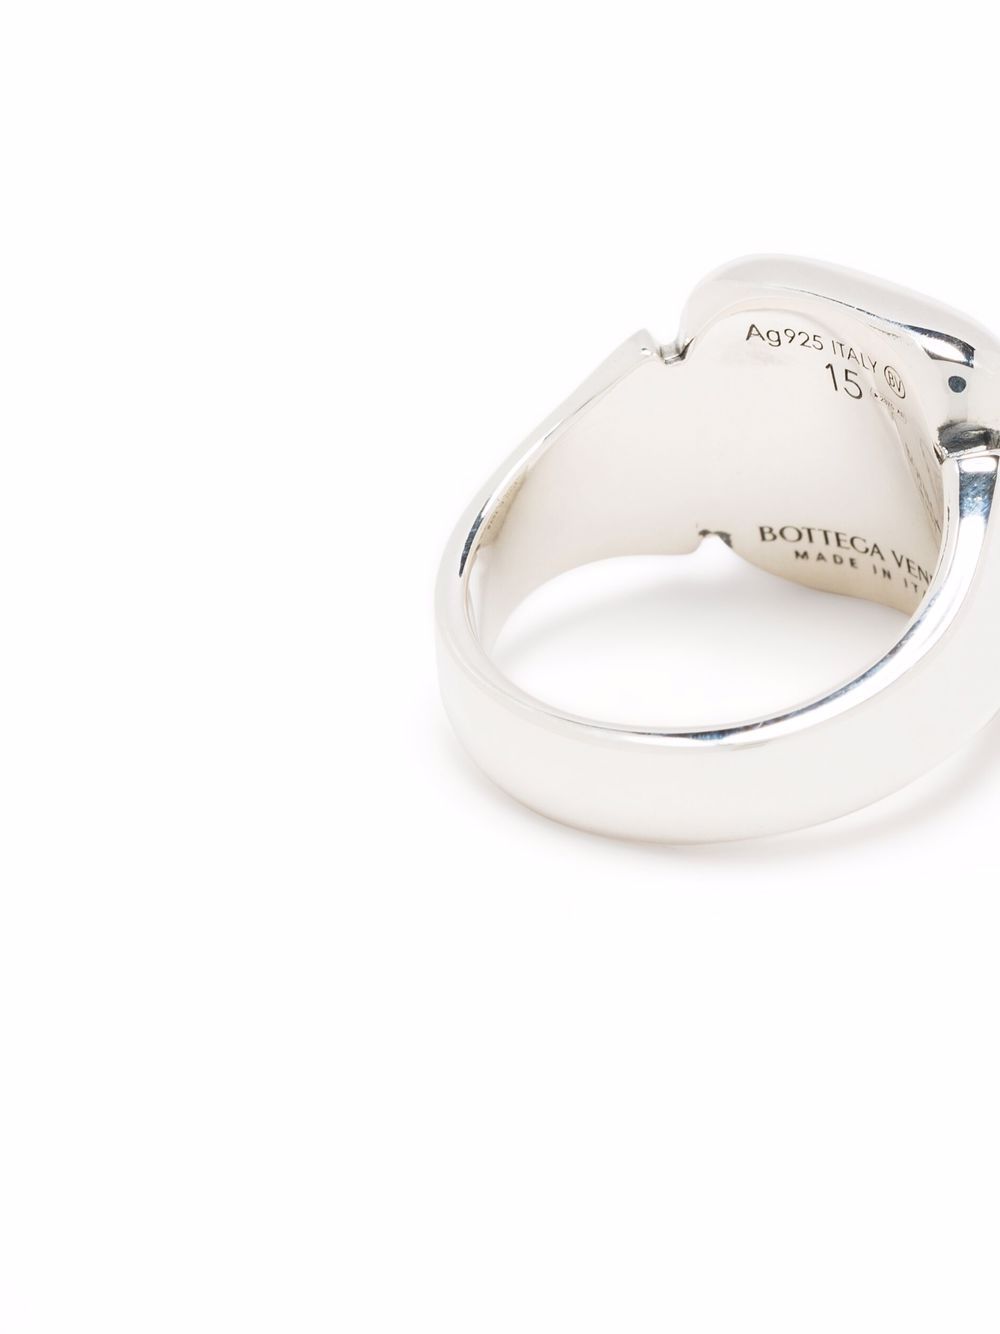 фото Bottega veneta серебряное кольцо-печатка